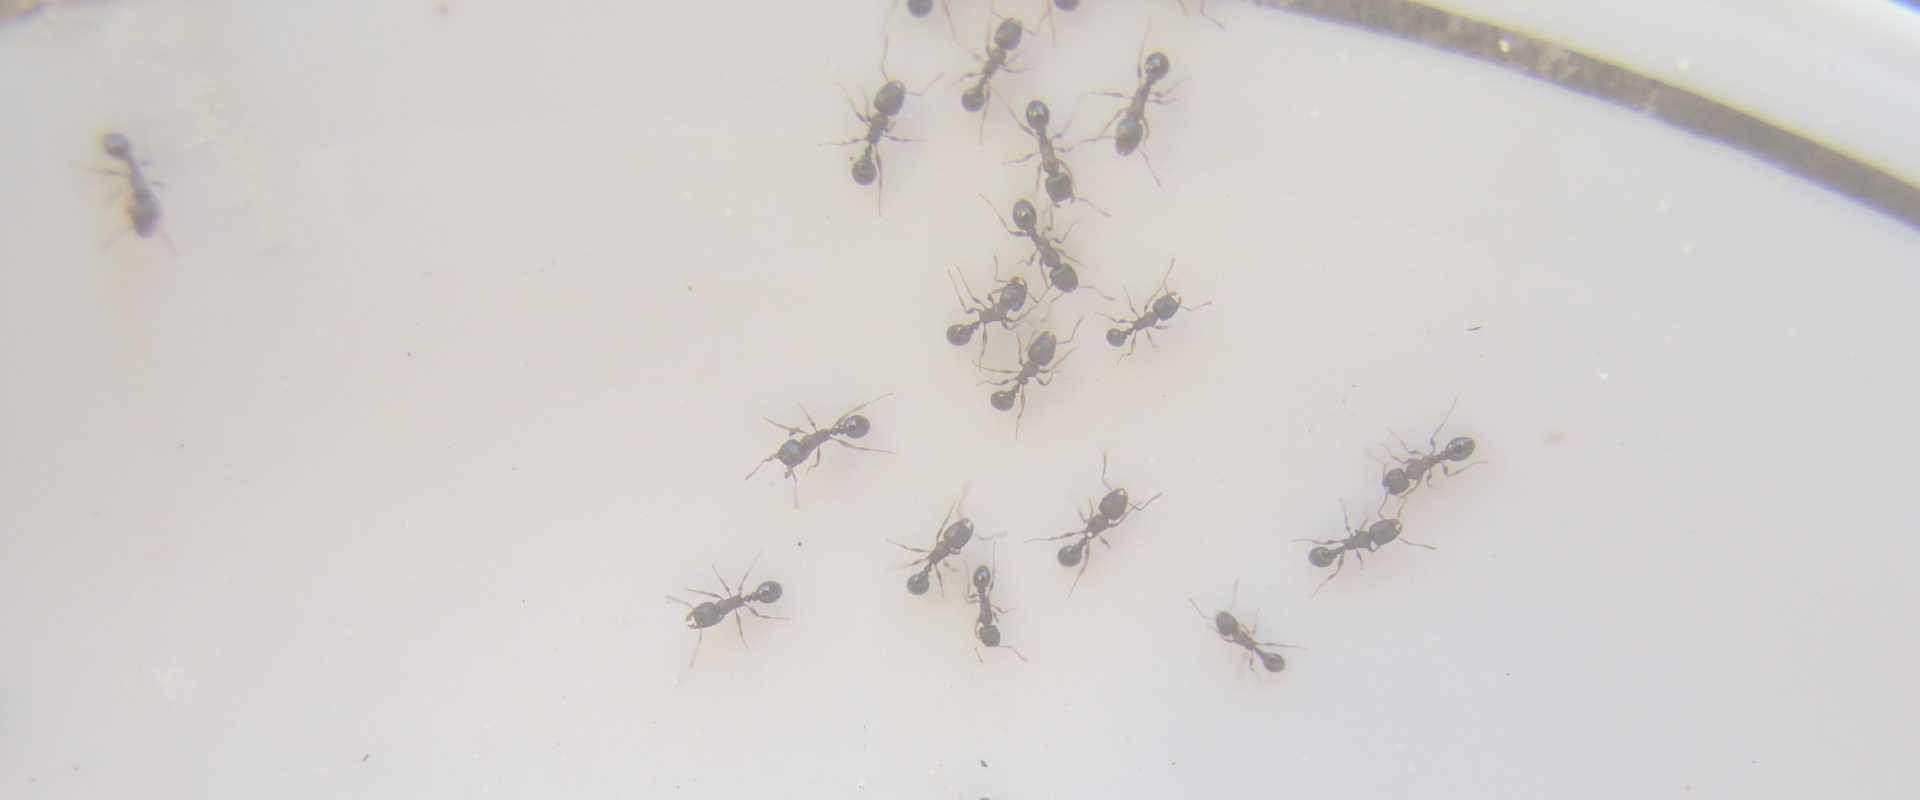 pest control in kensington md